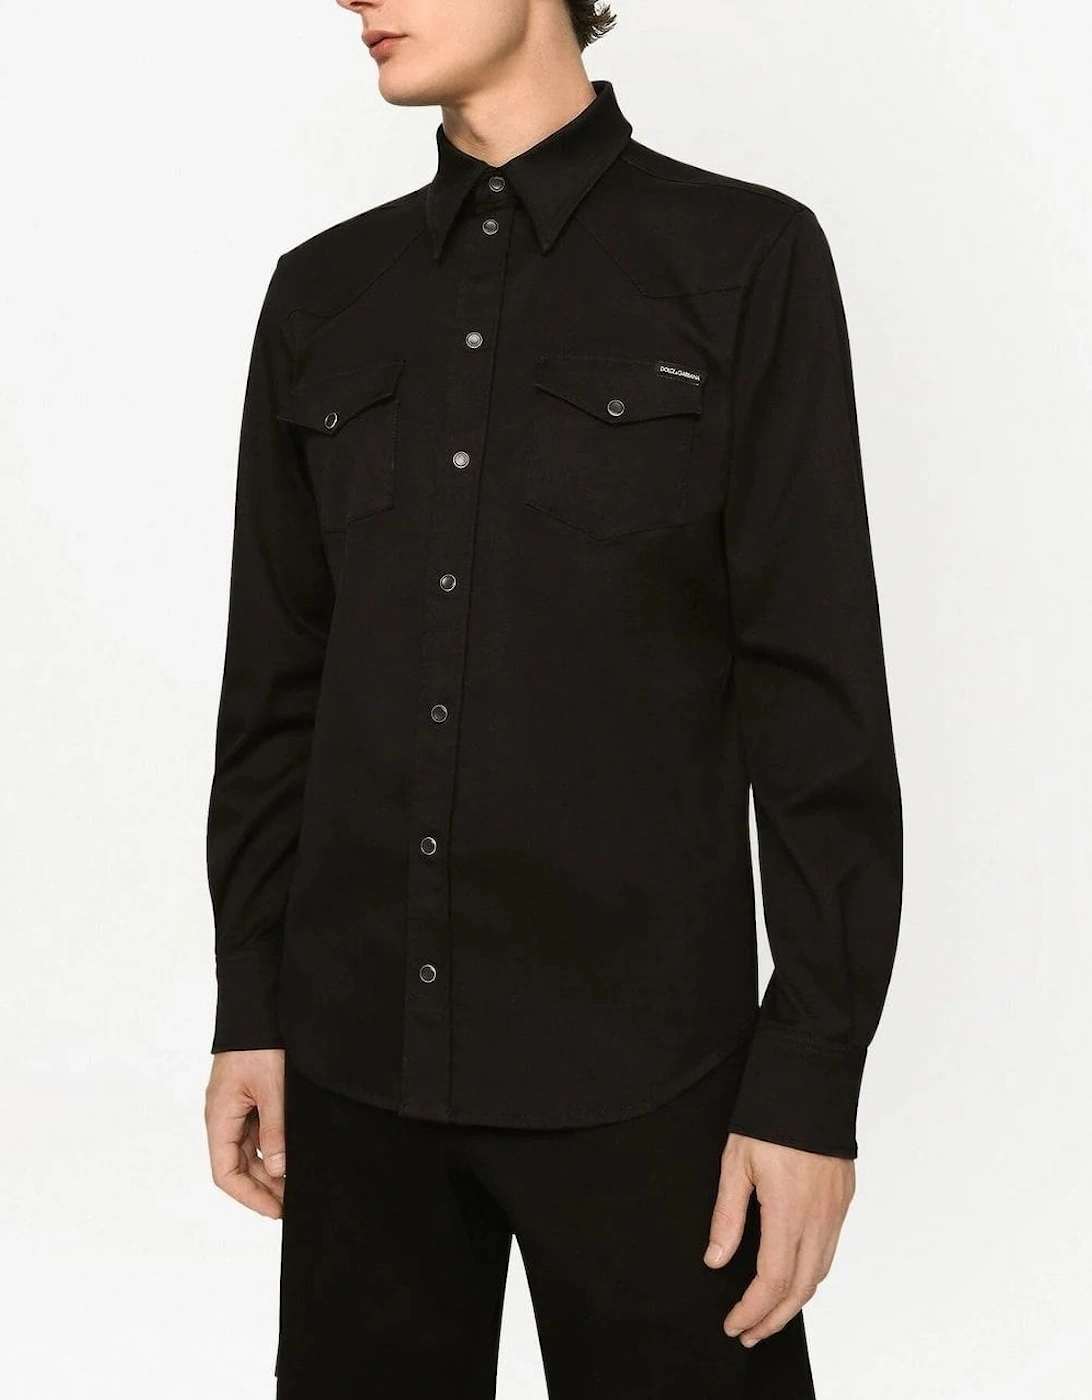 Western Branded Shirt Black